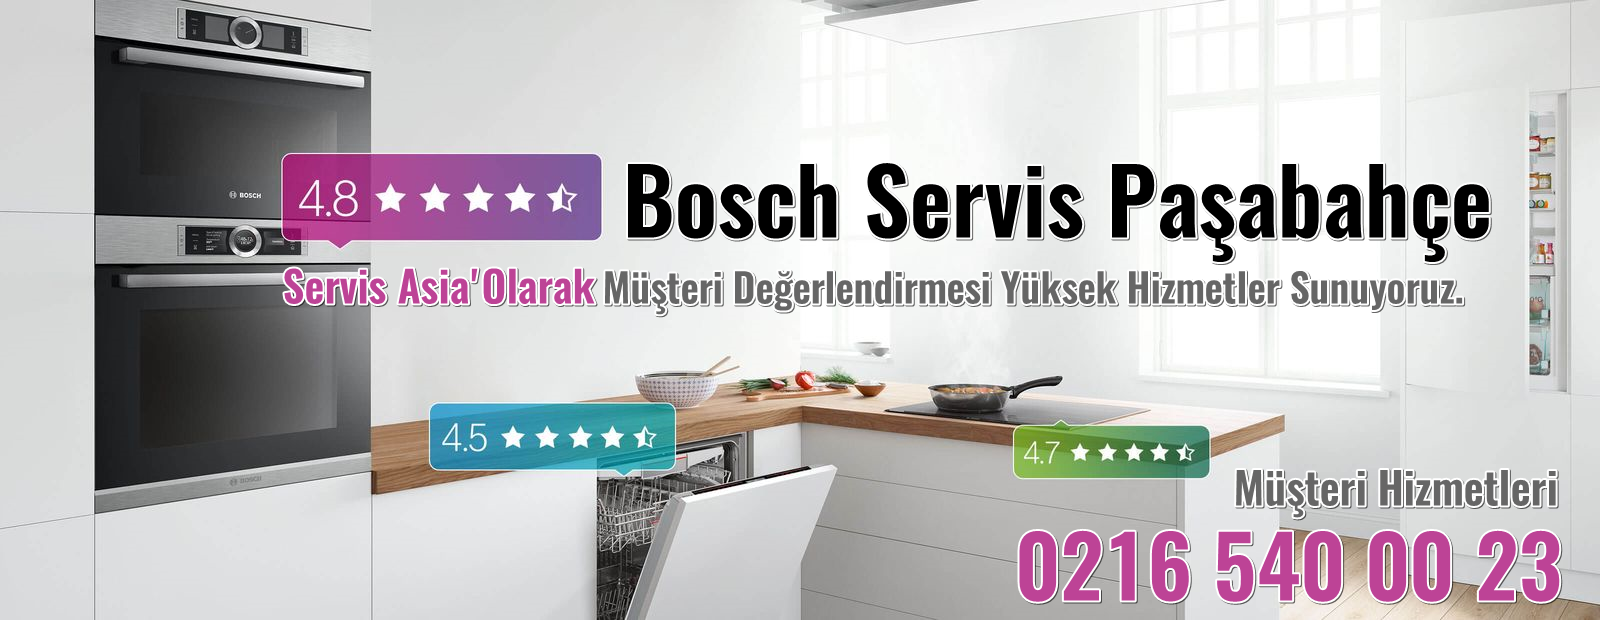 Bosch Servis Pasabahce